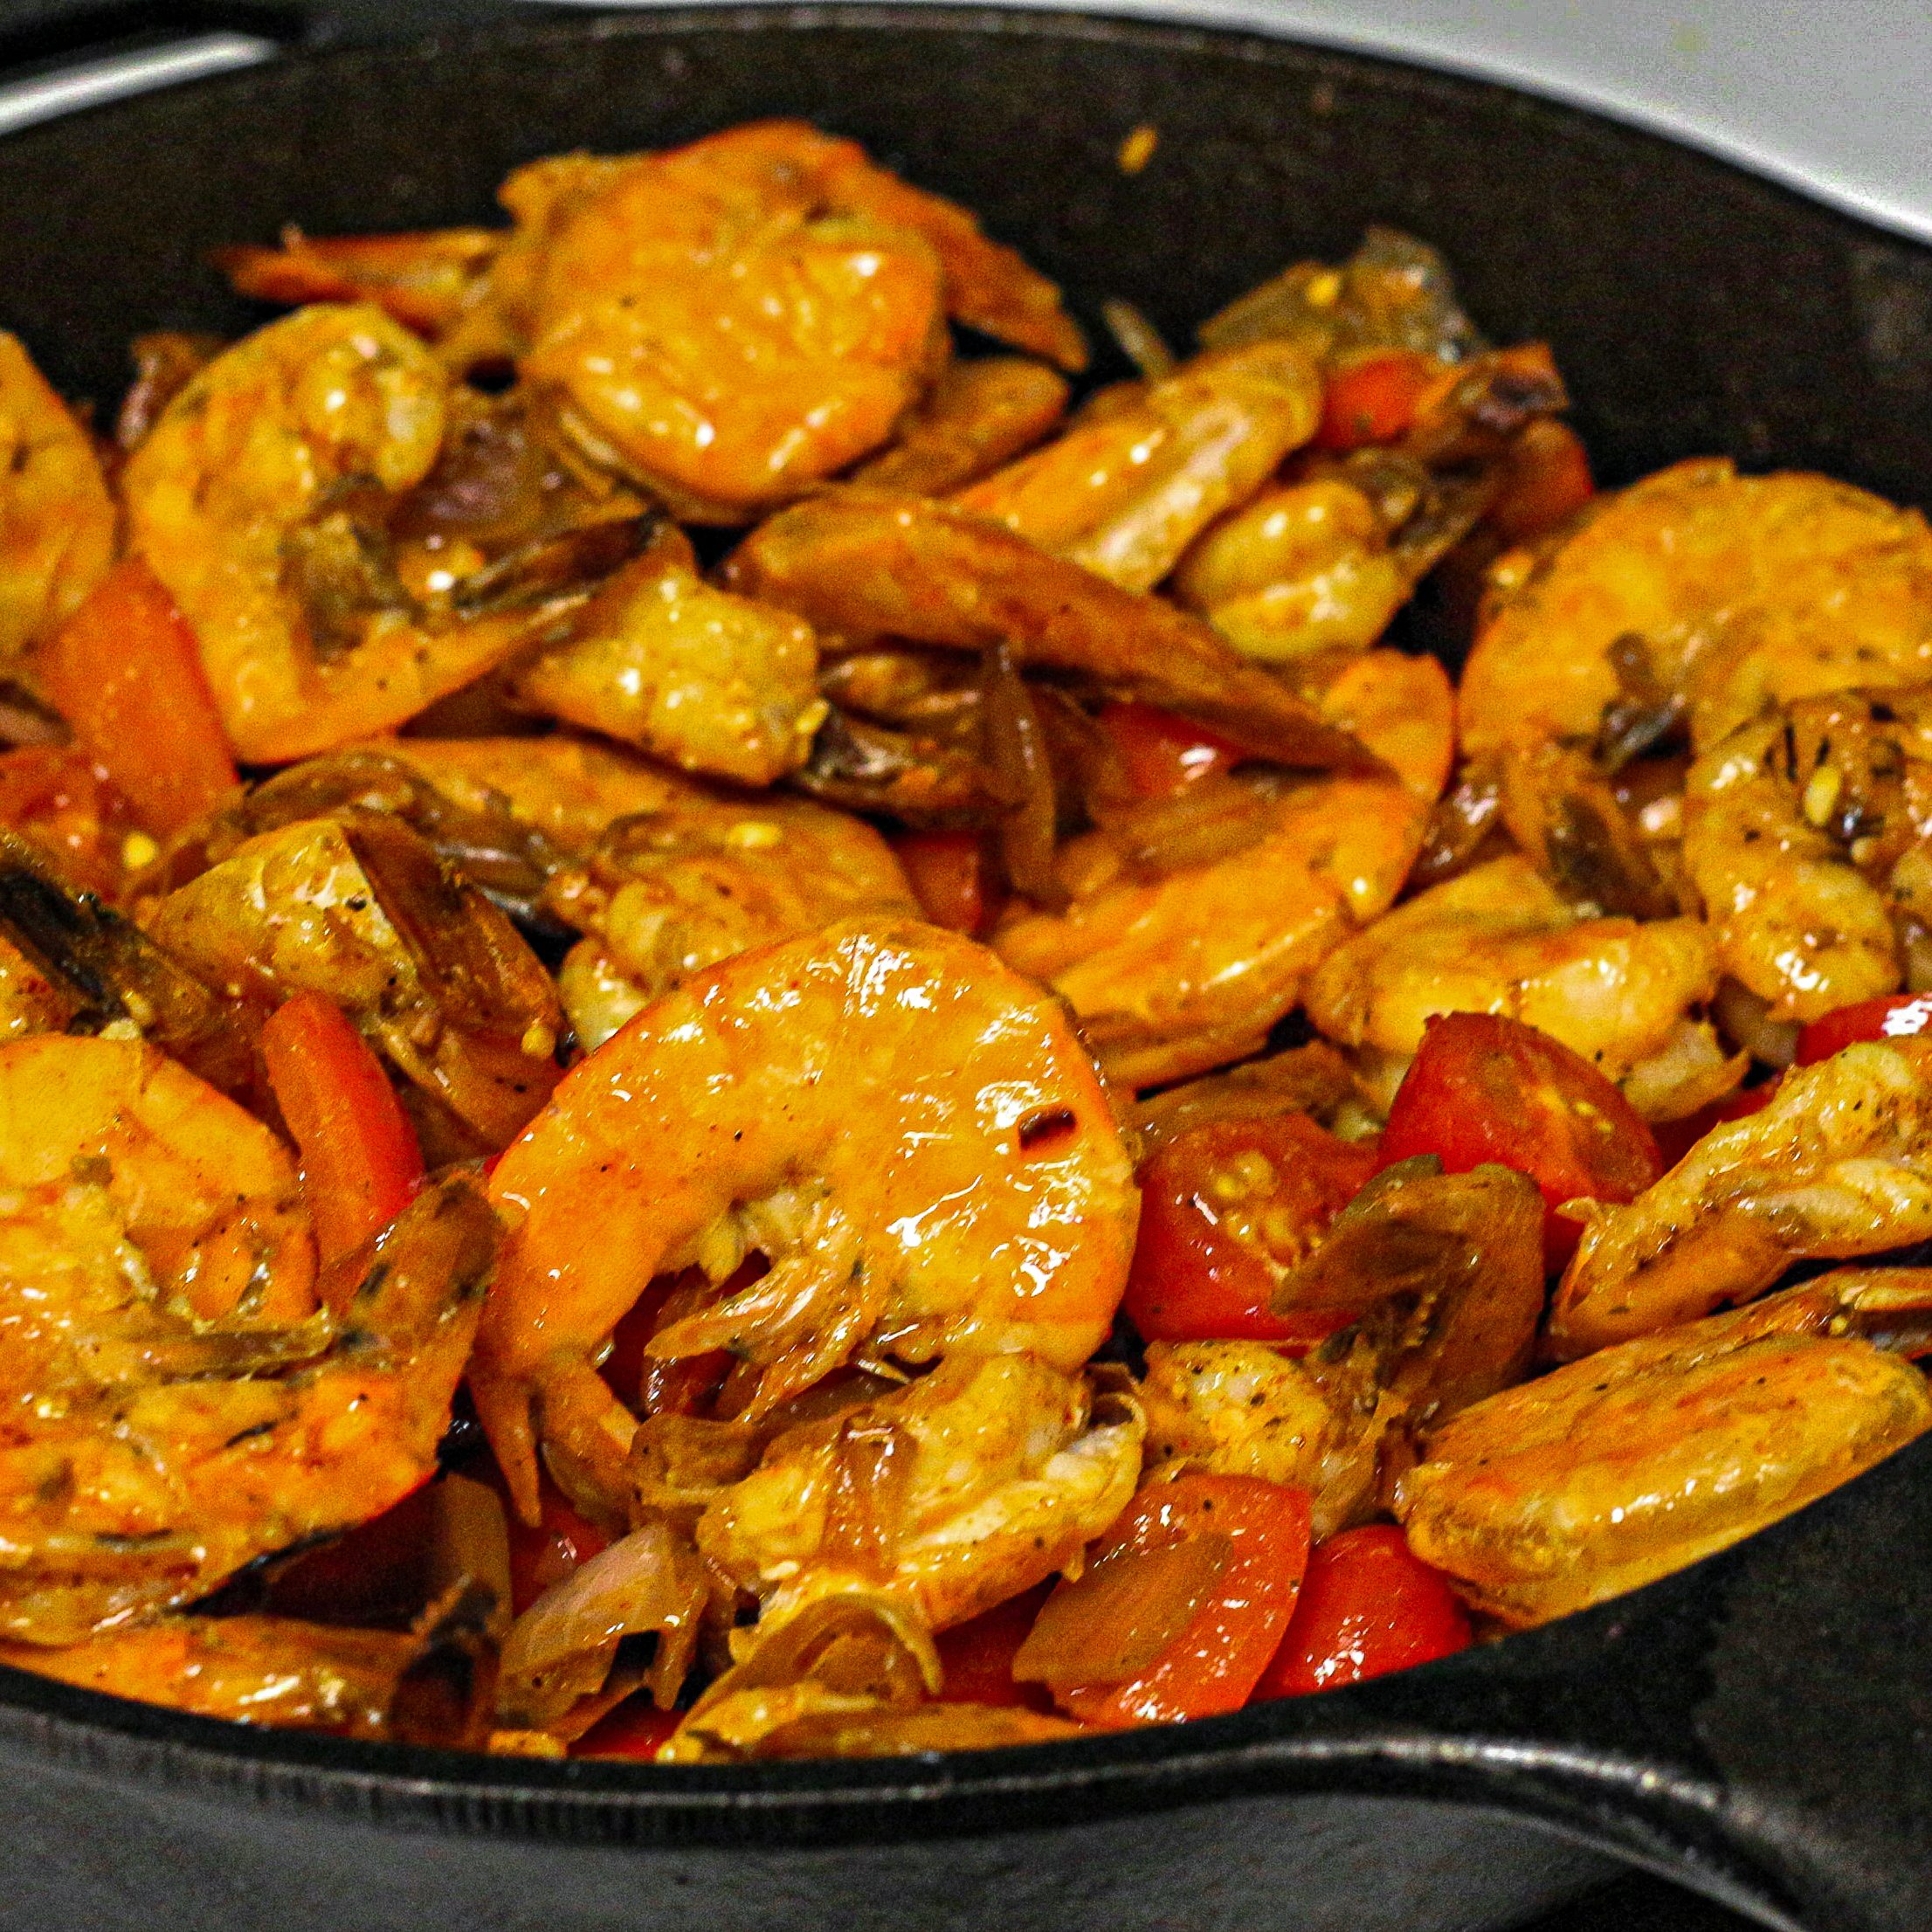 Add your shrimp and cook until the shrimp is no longer translucent, about 4 minutes.